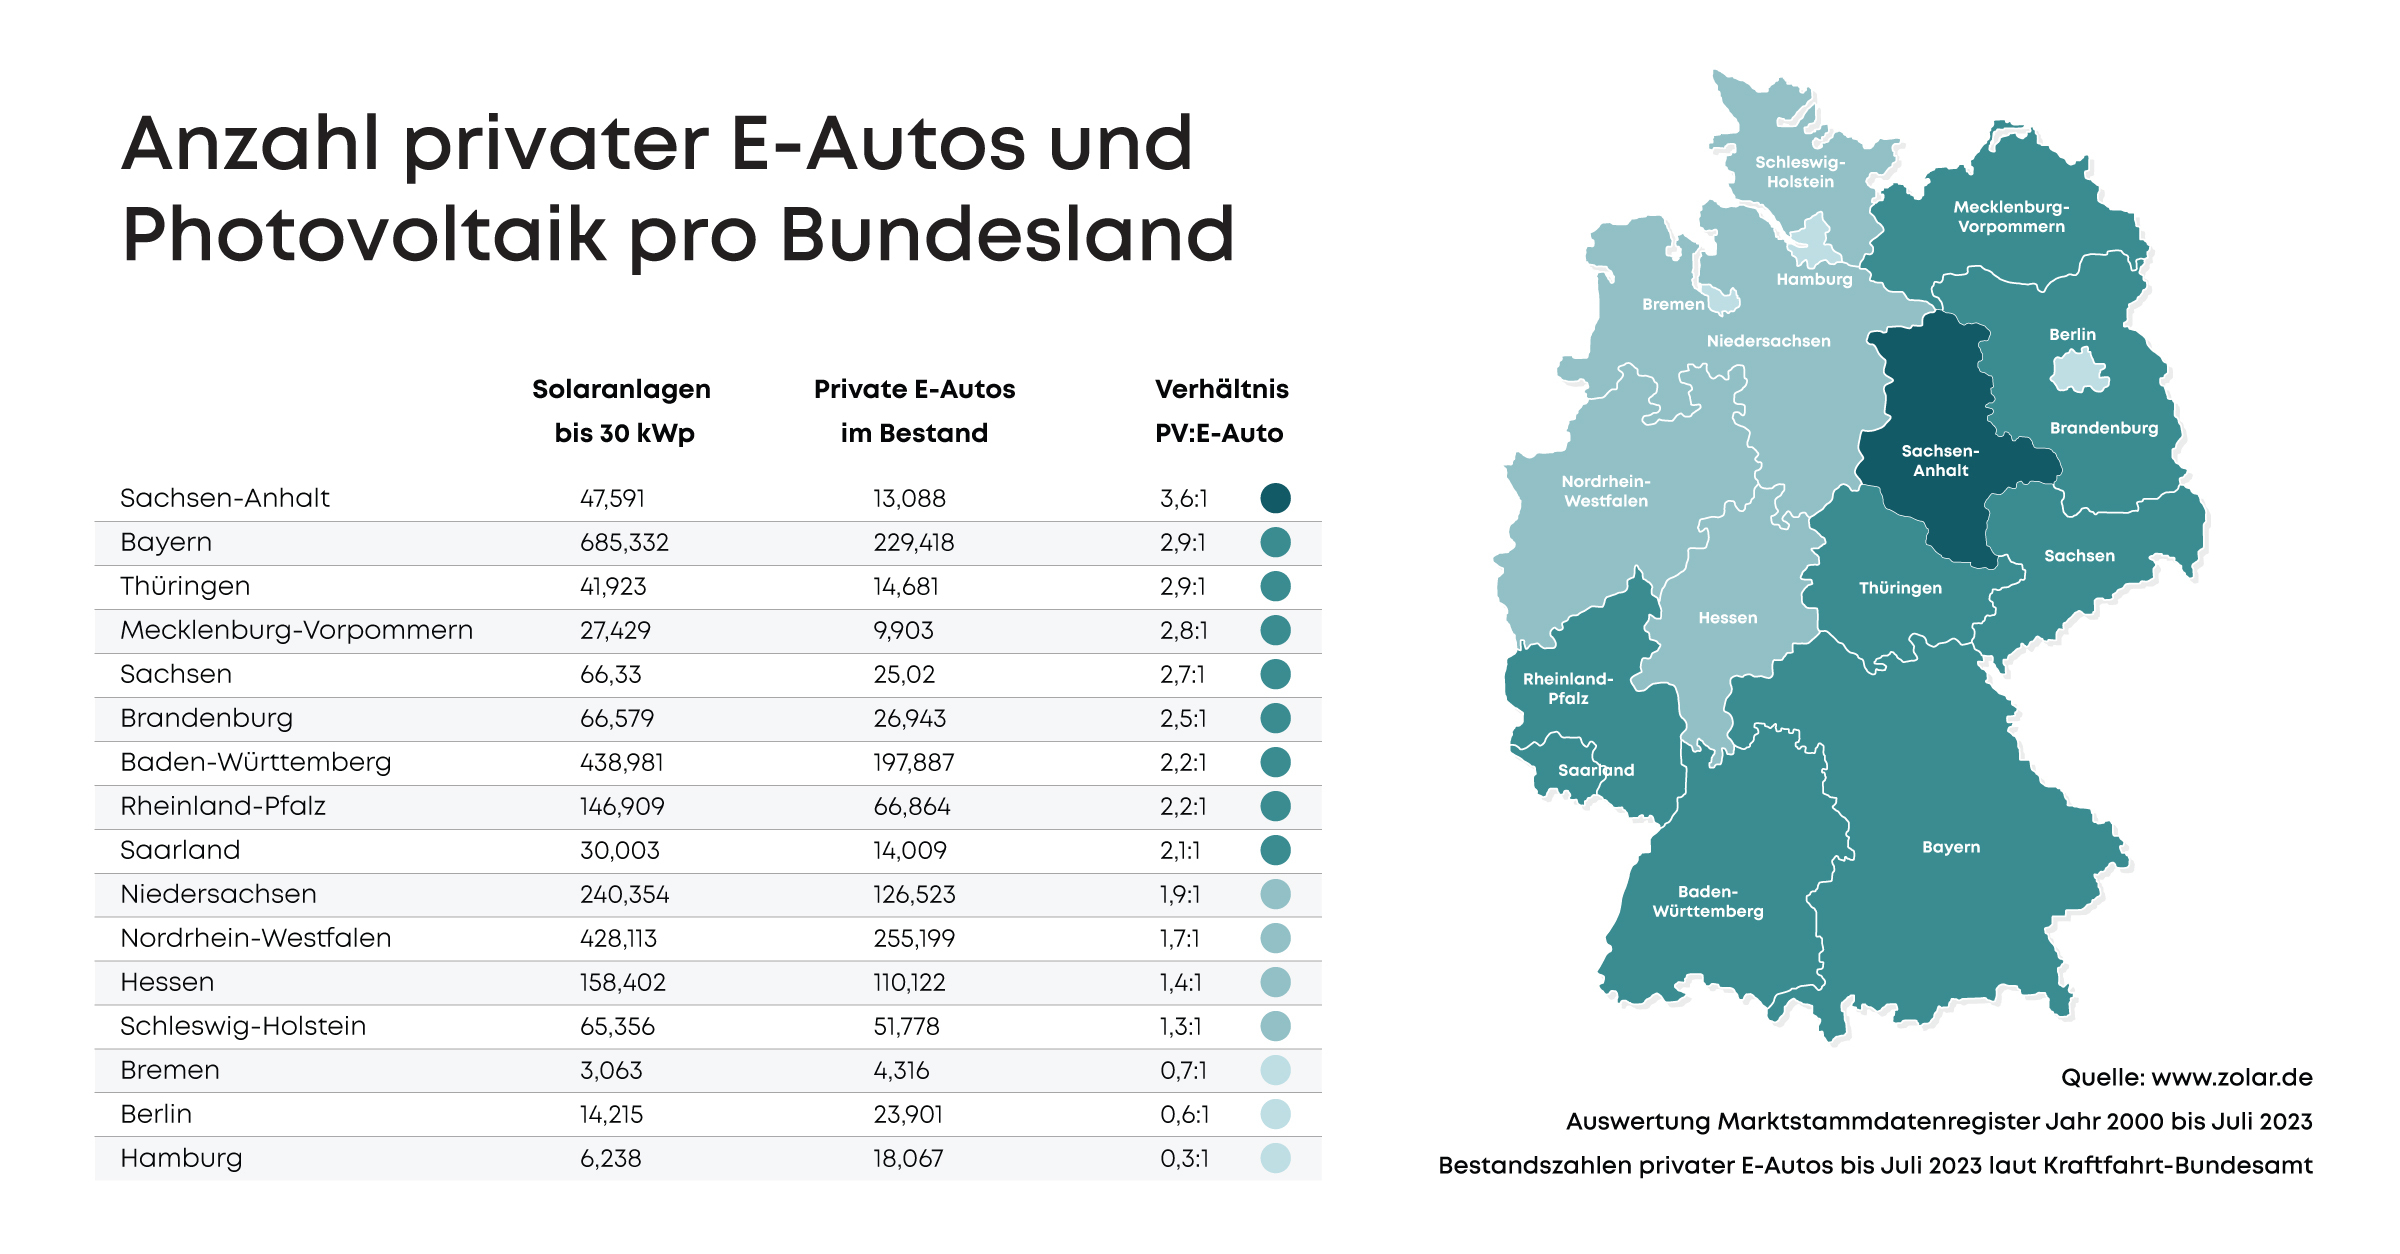 zolar_Infografik_Anzahl-privater-E-Autos-und-Photovoltaik-pro-Bundesland